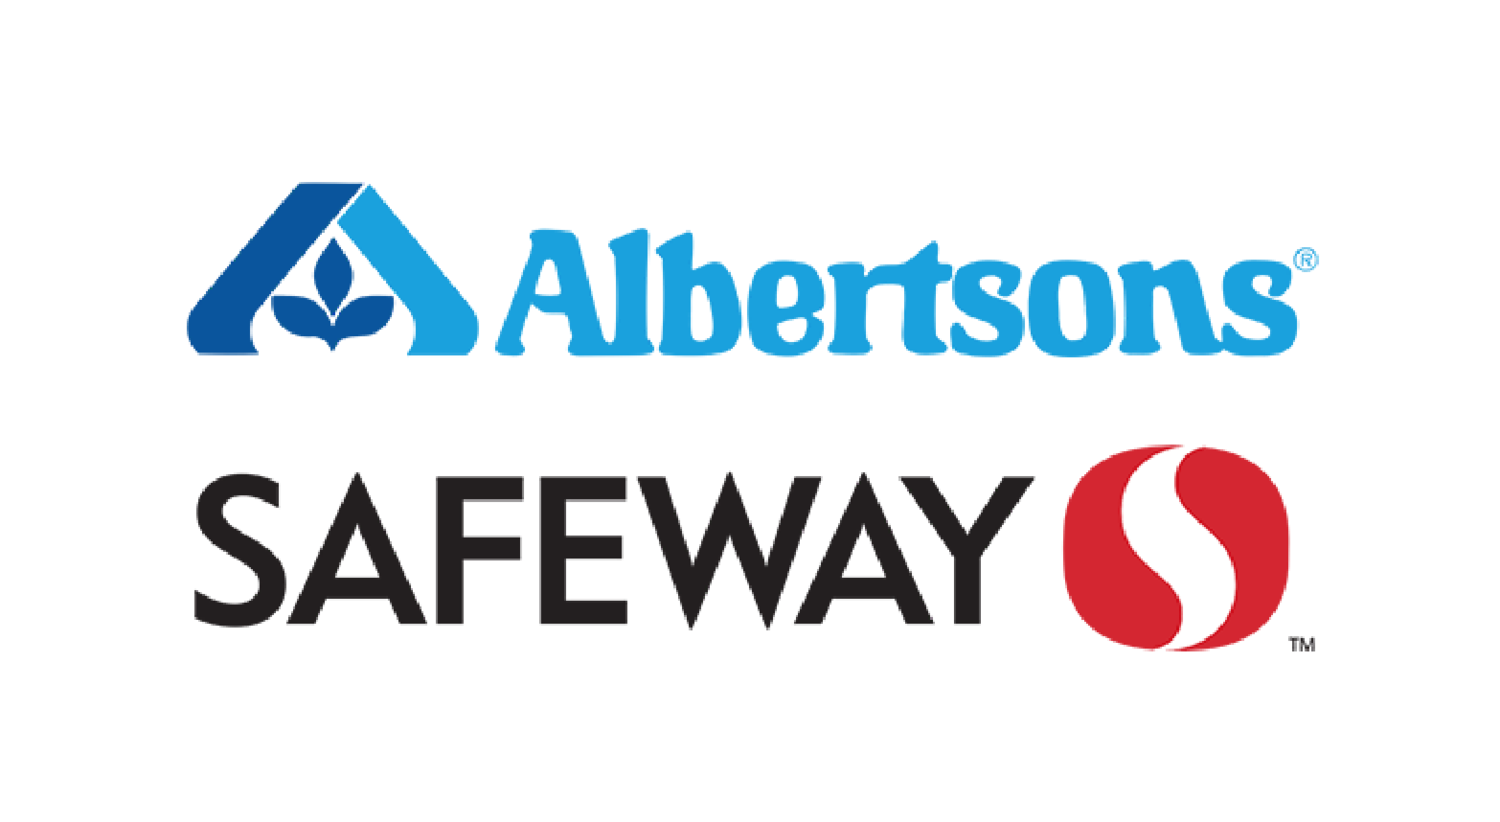 albertsons Safeway logo